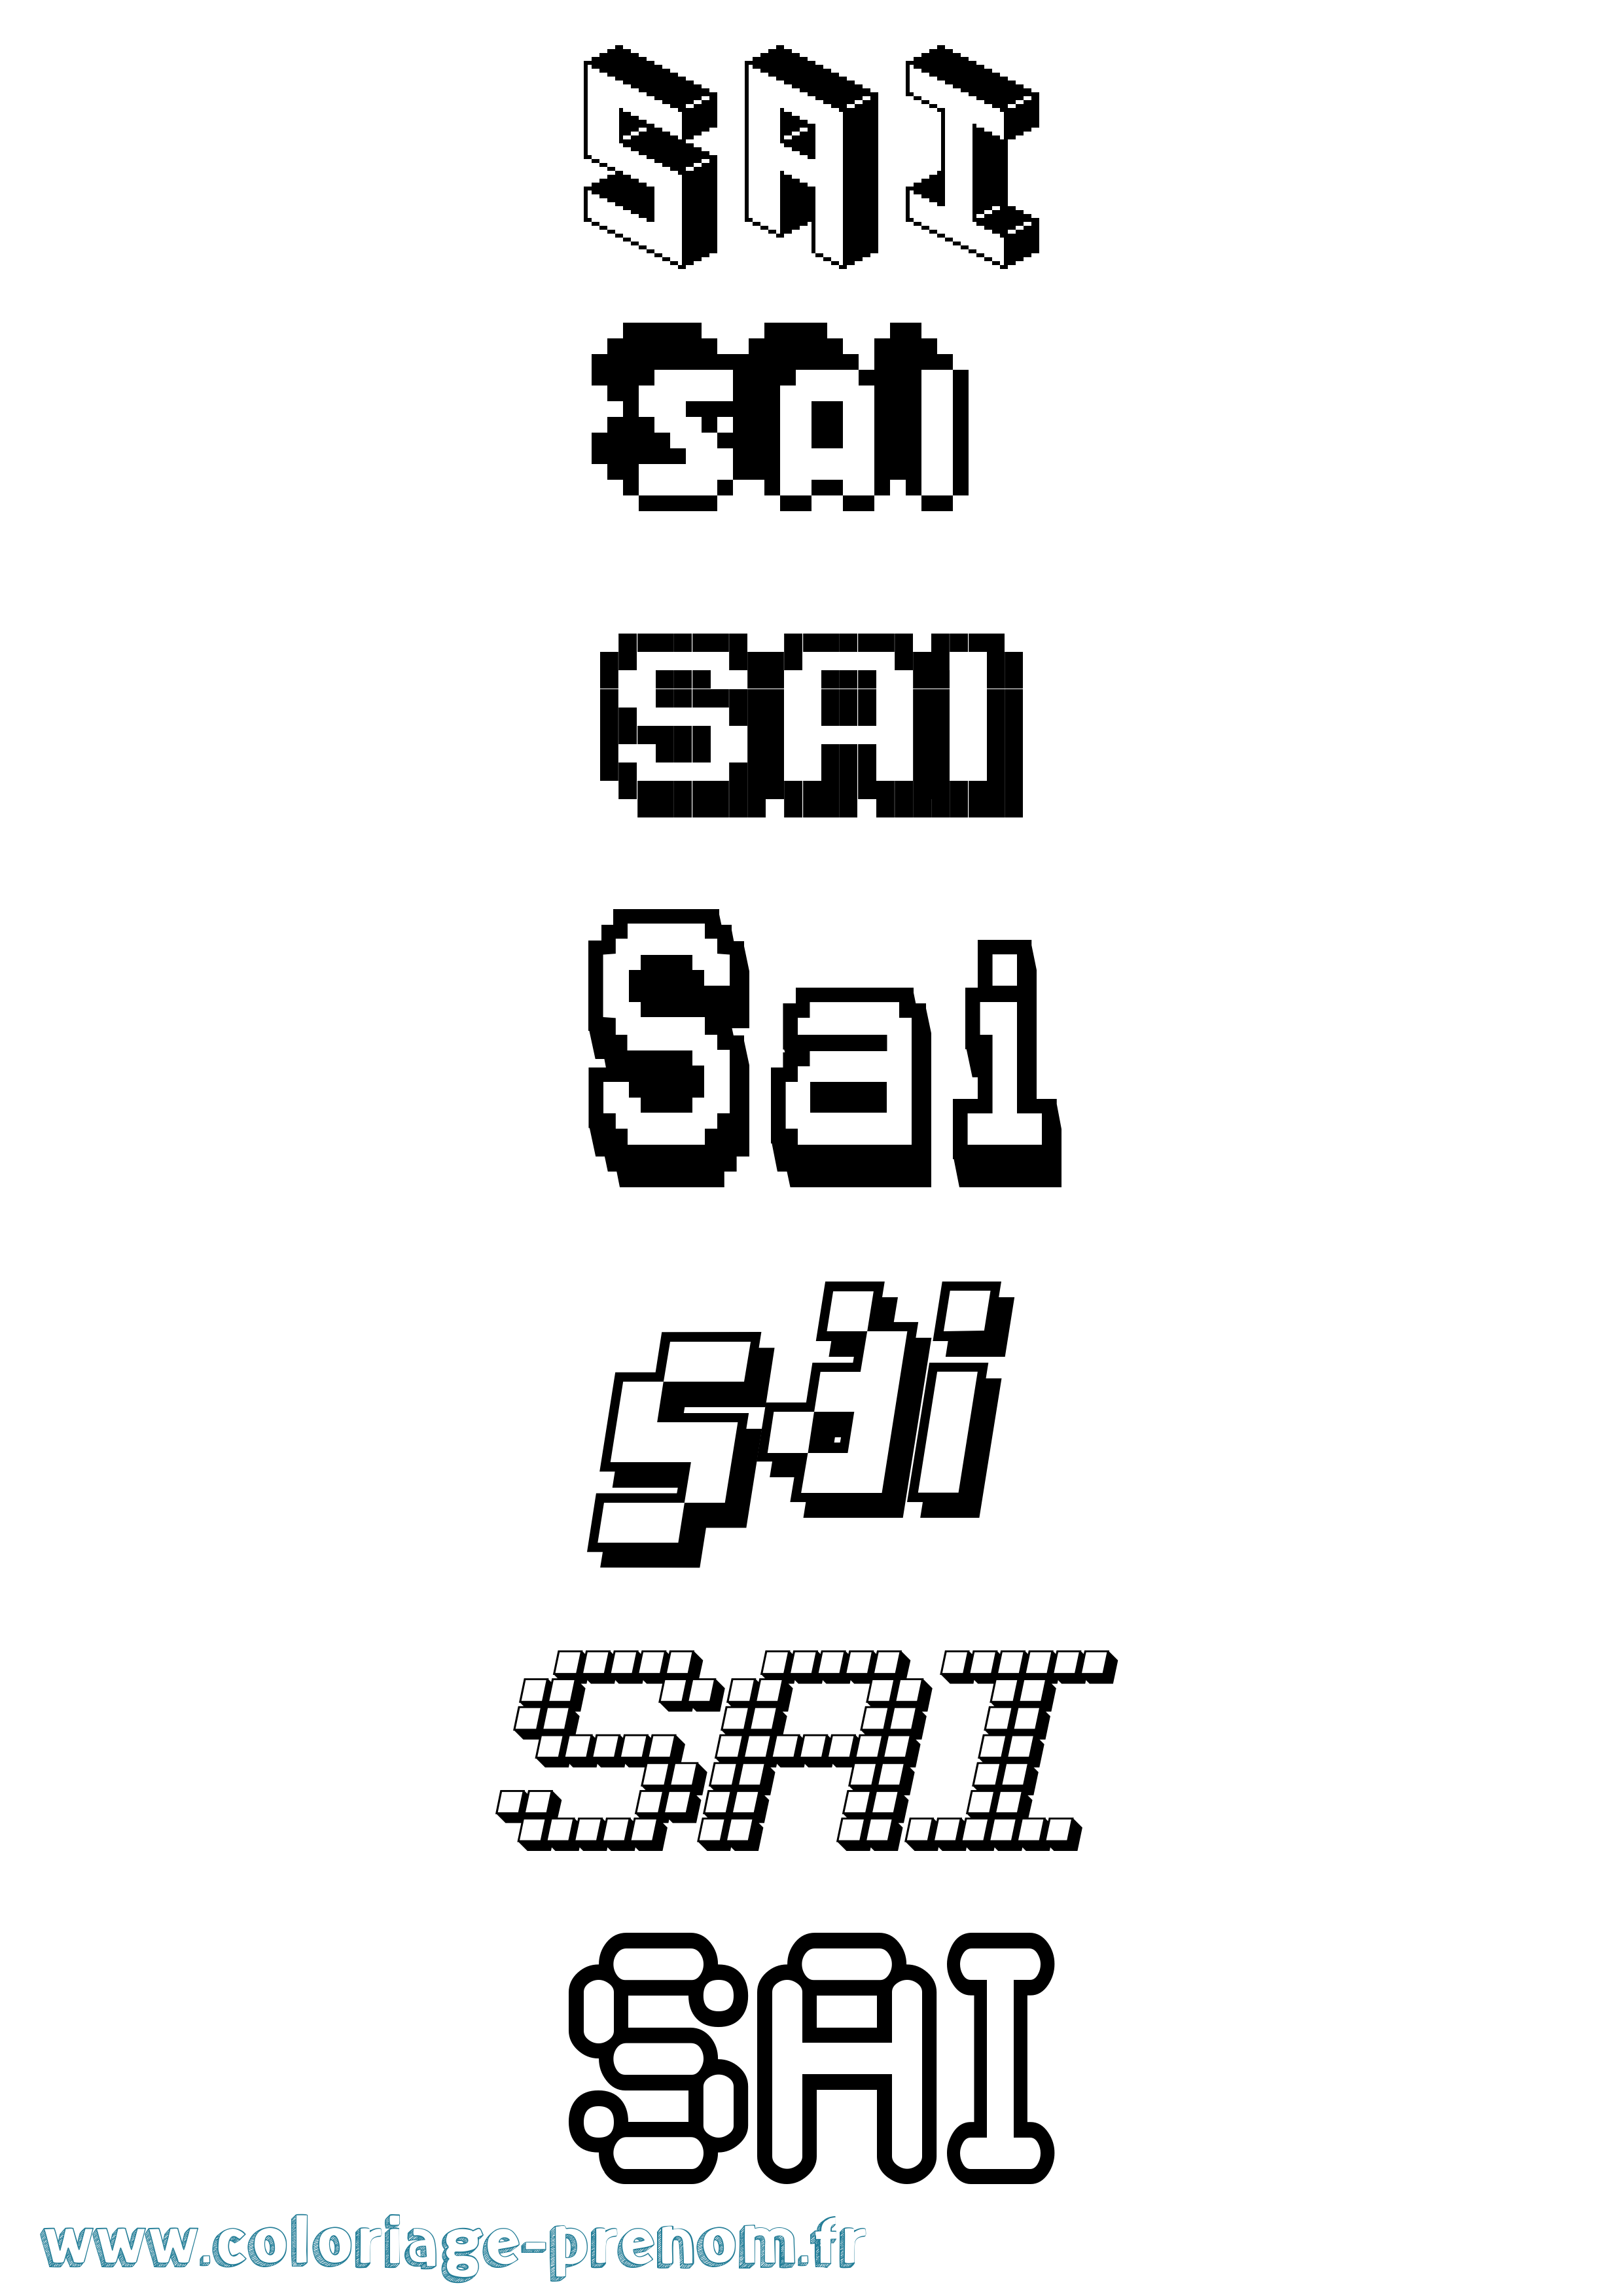 Coloriage prénom Sai Pixel